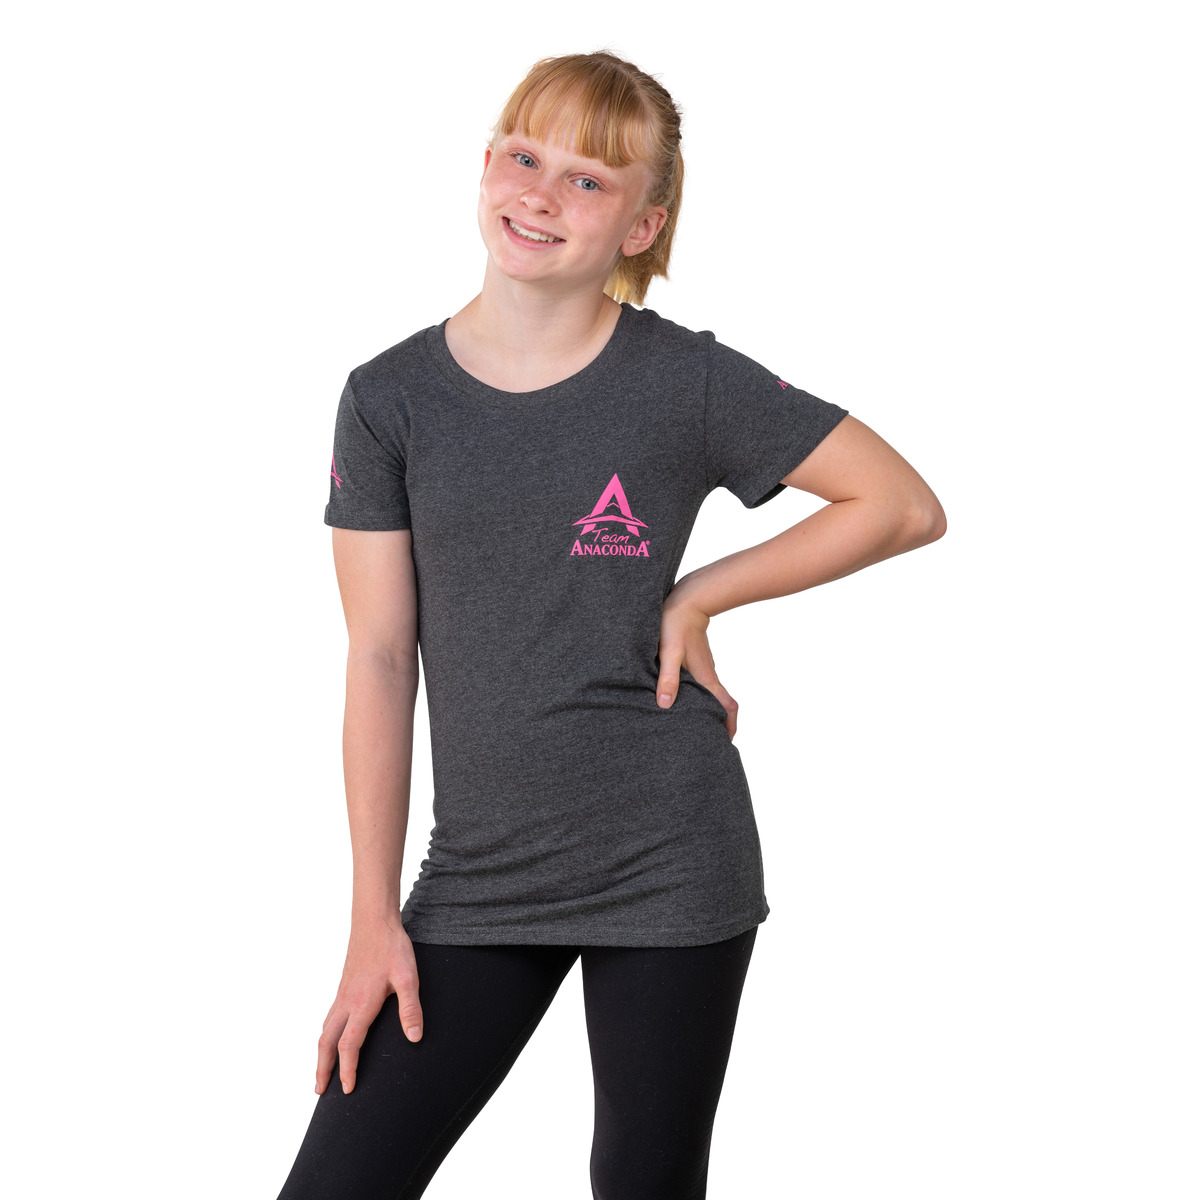 Anaconda Lady Team T - Shirt - XS